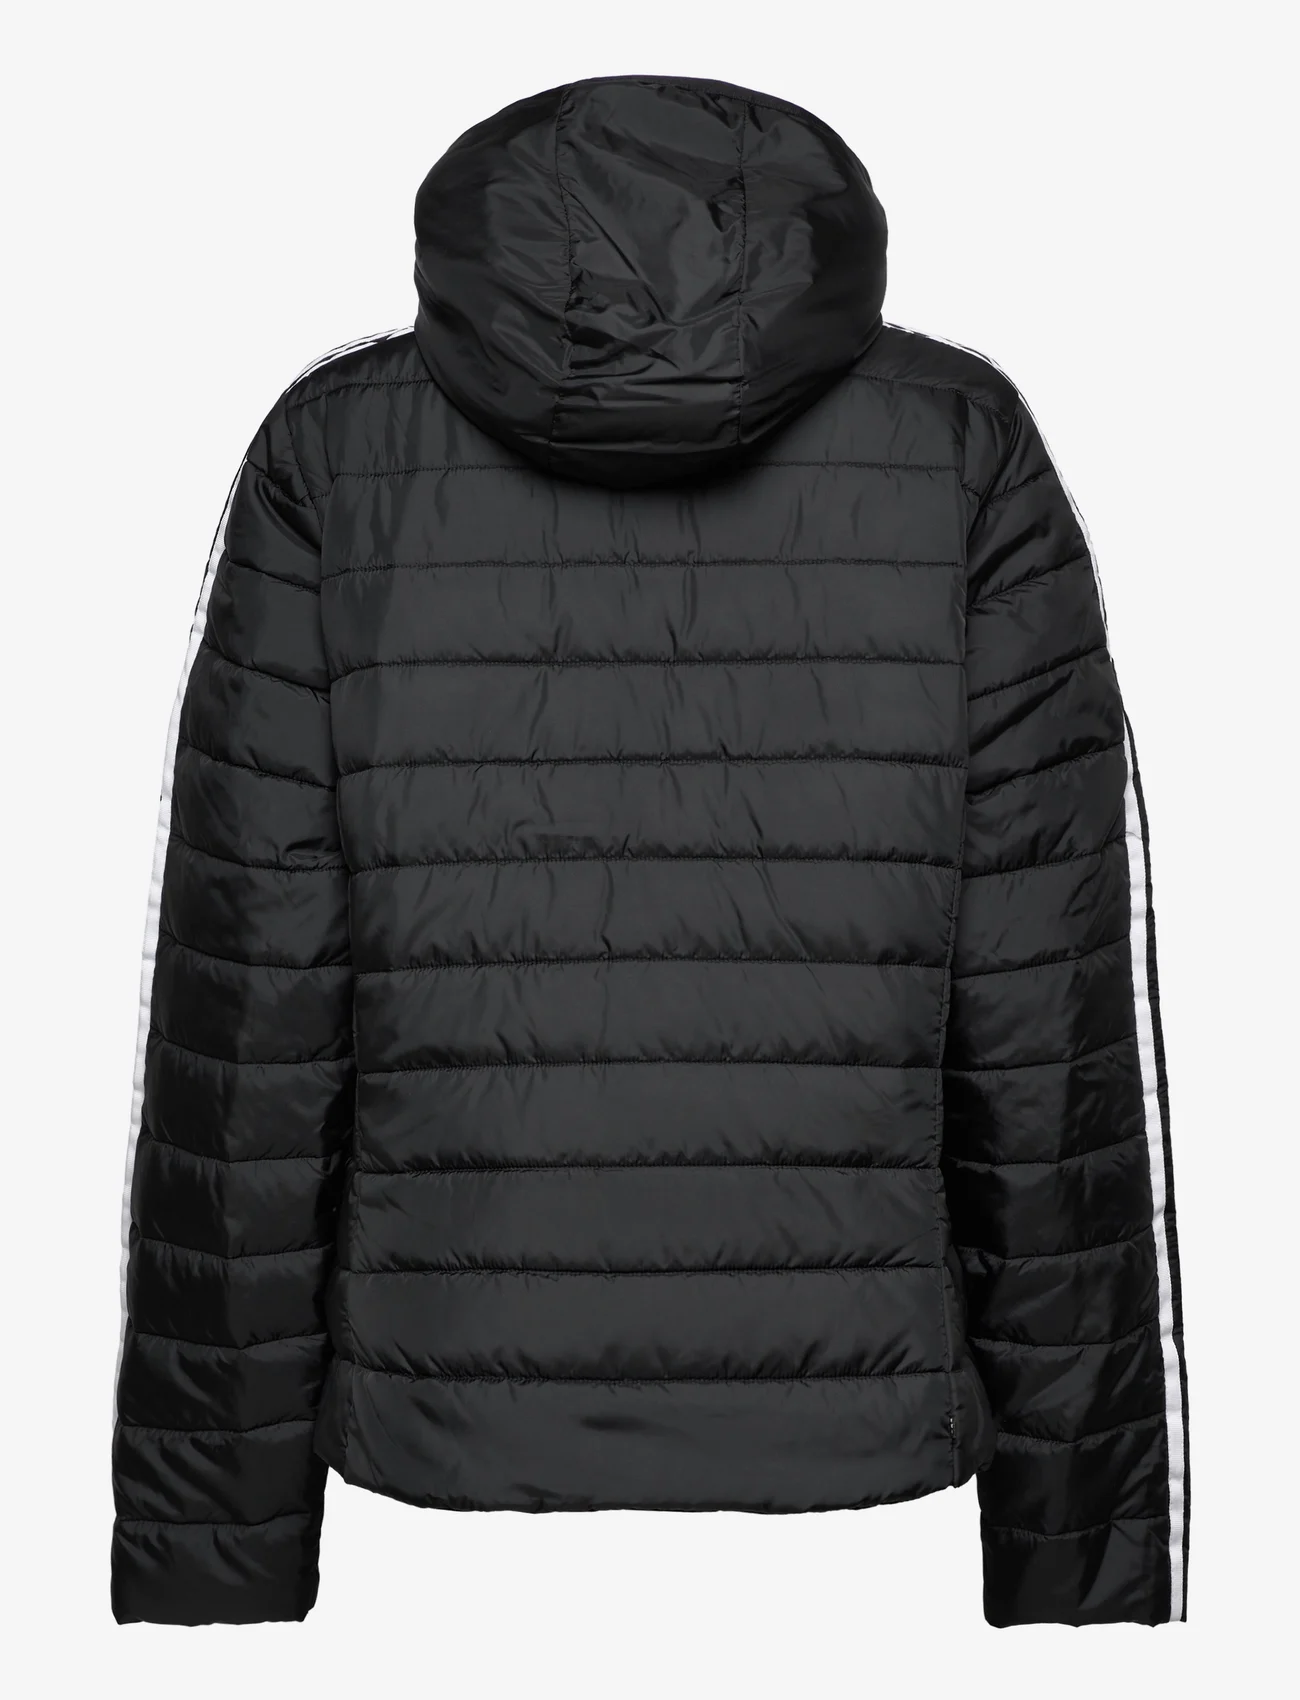 adidas Originals - Hooded Premium Slim Jacket (Plus Size) - vinterjackor - black - 1